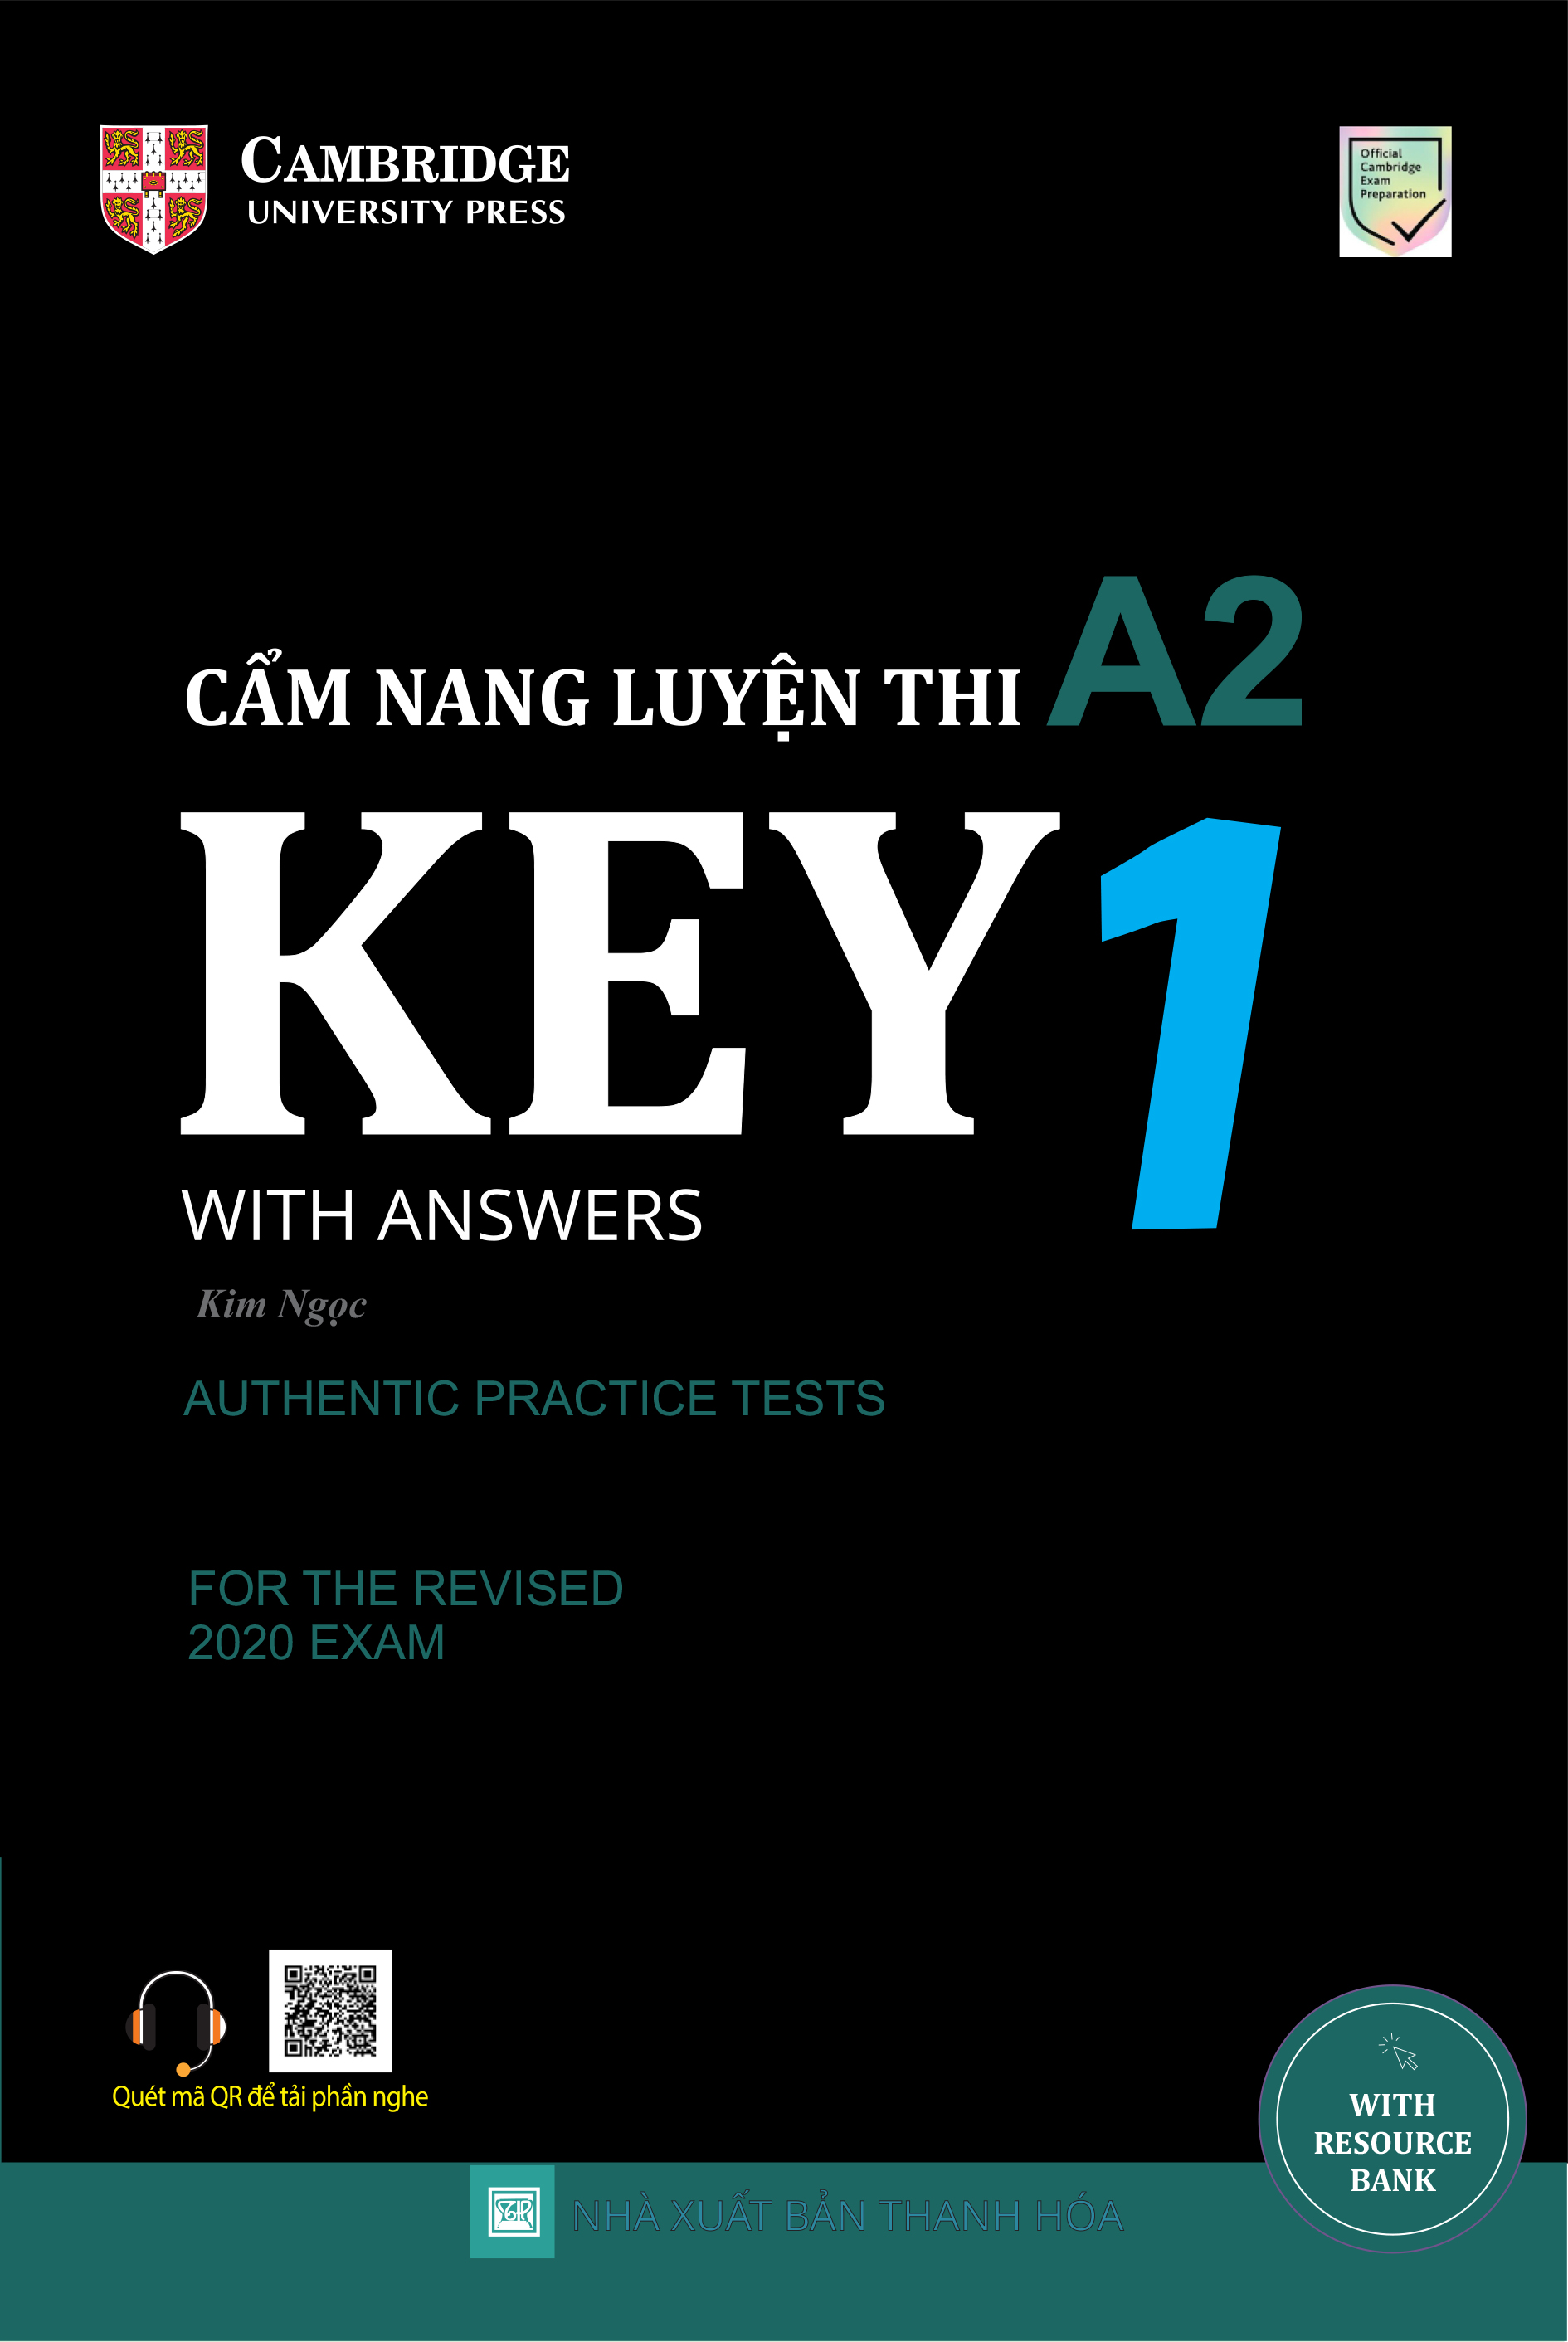 Cẩm nang luyện thi A2 Key 1 with answers